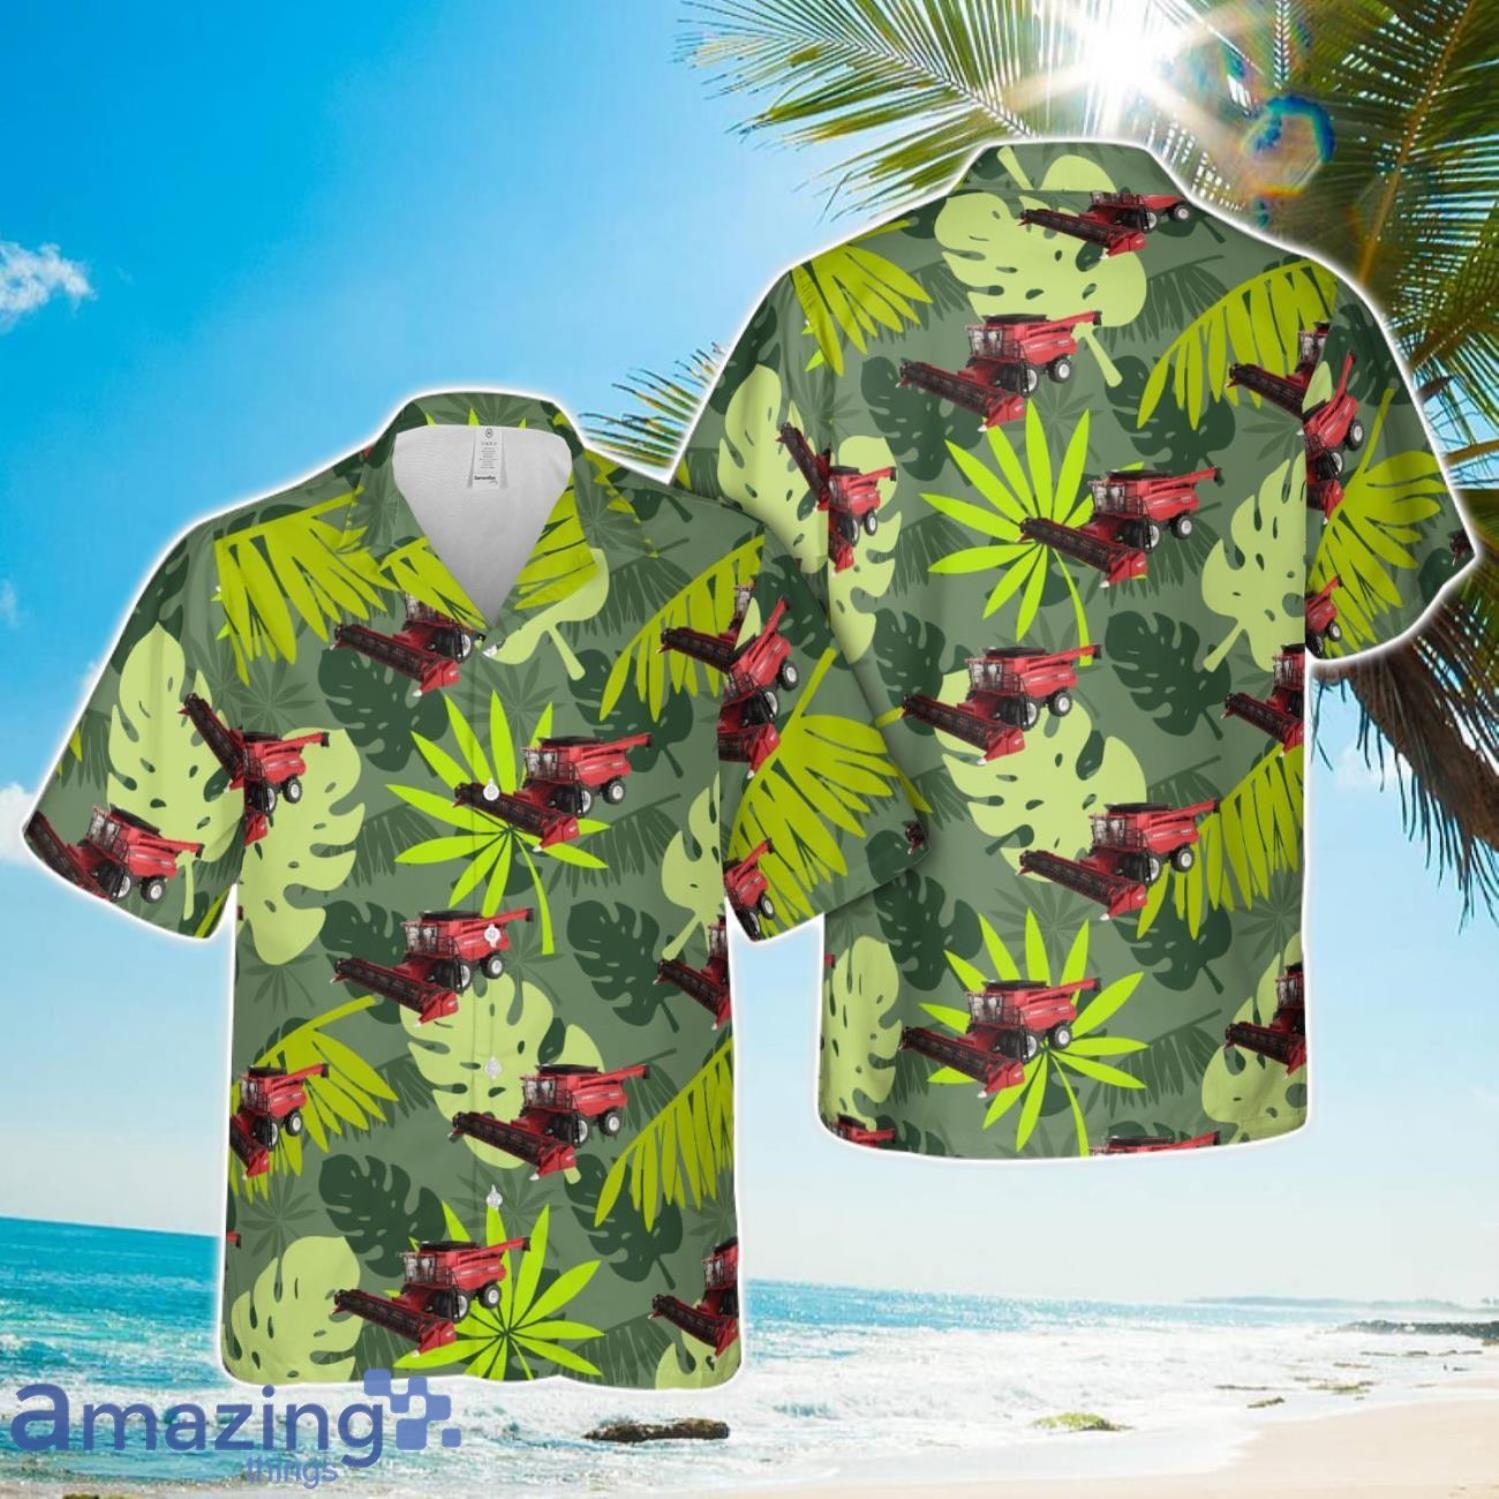 Case IH 8240 Combine Harvester Hawaiian Shirt Aloha Beach Summer Shirt Product Photo 1